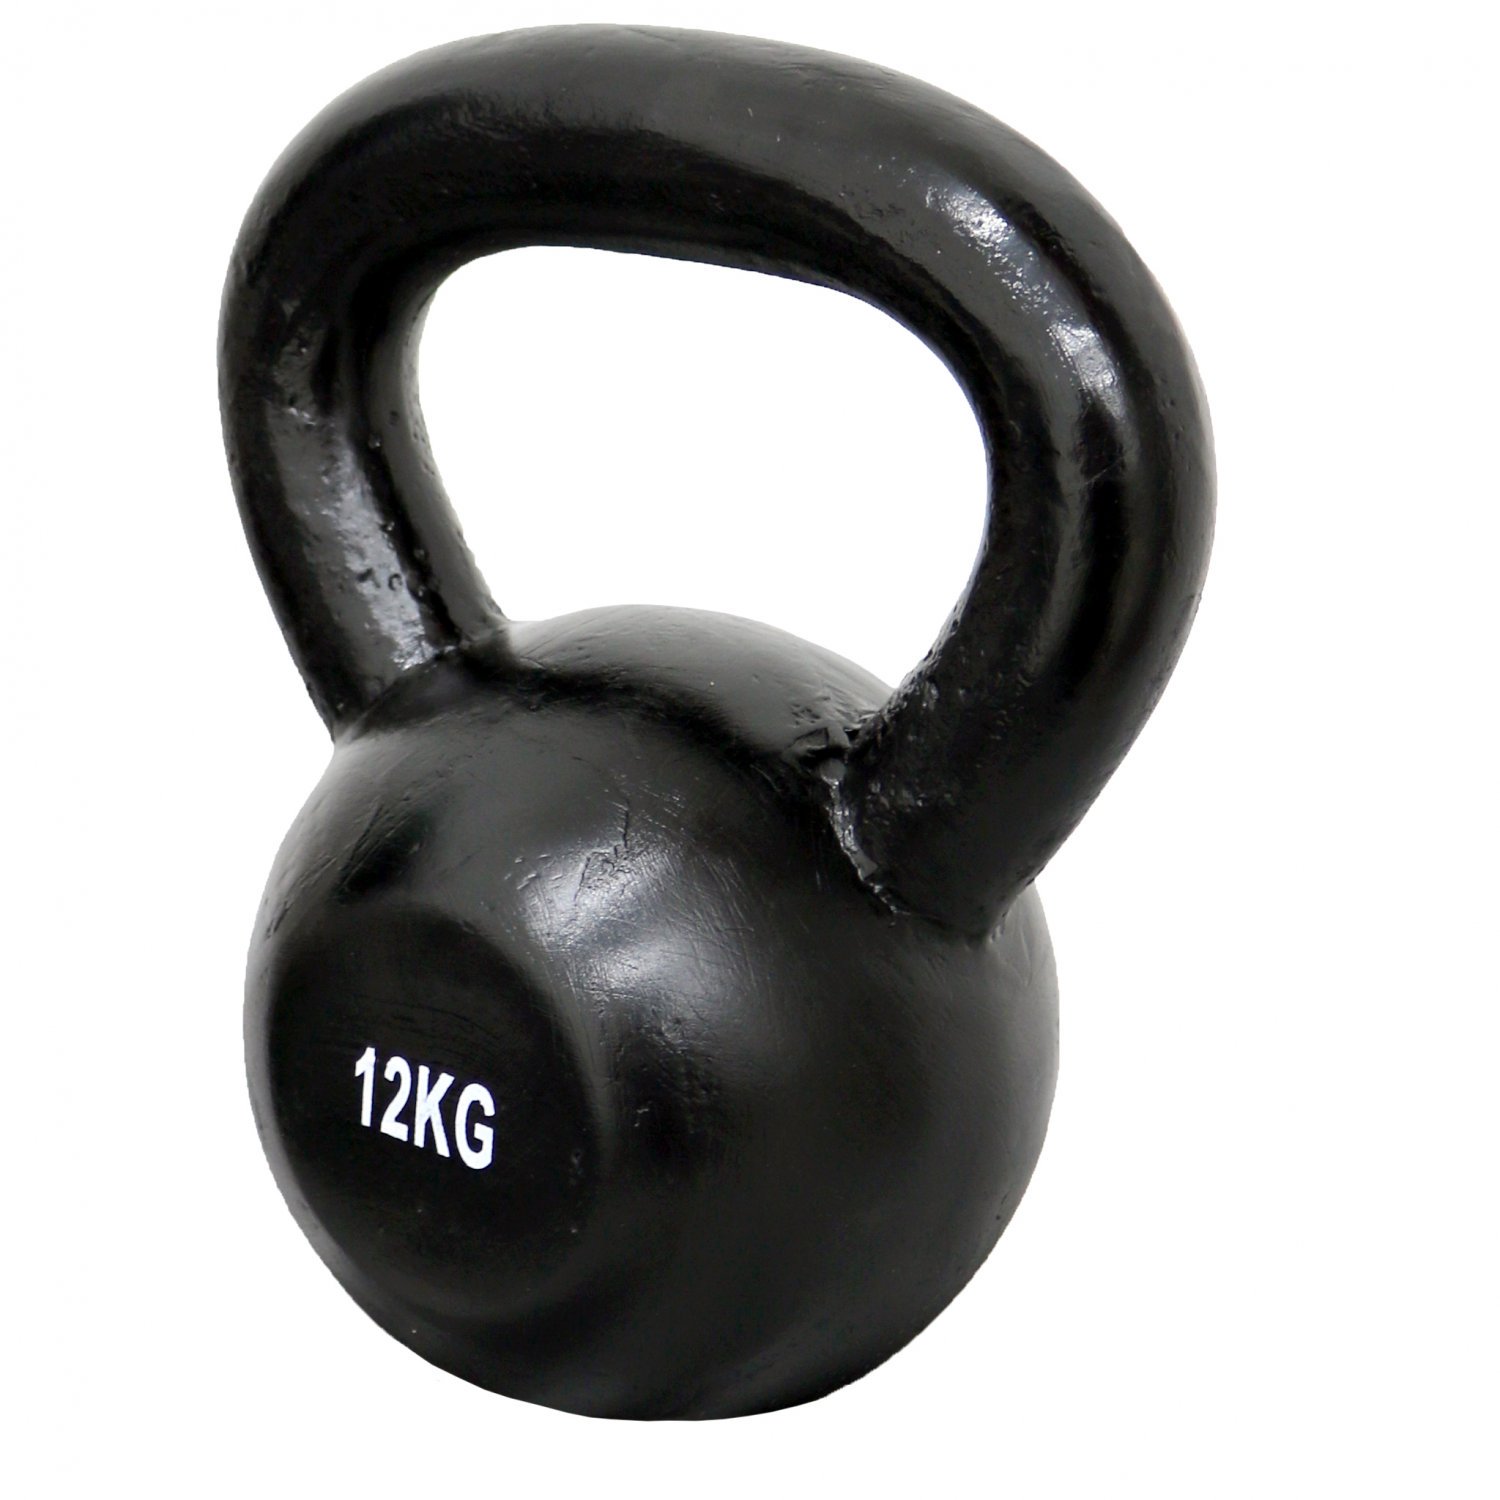 12kg Cast Iron Kettlebell Weight Training Fitness Workout Gym